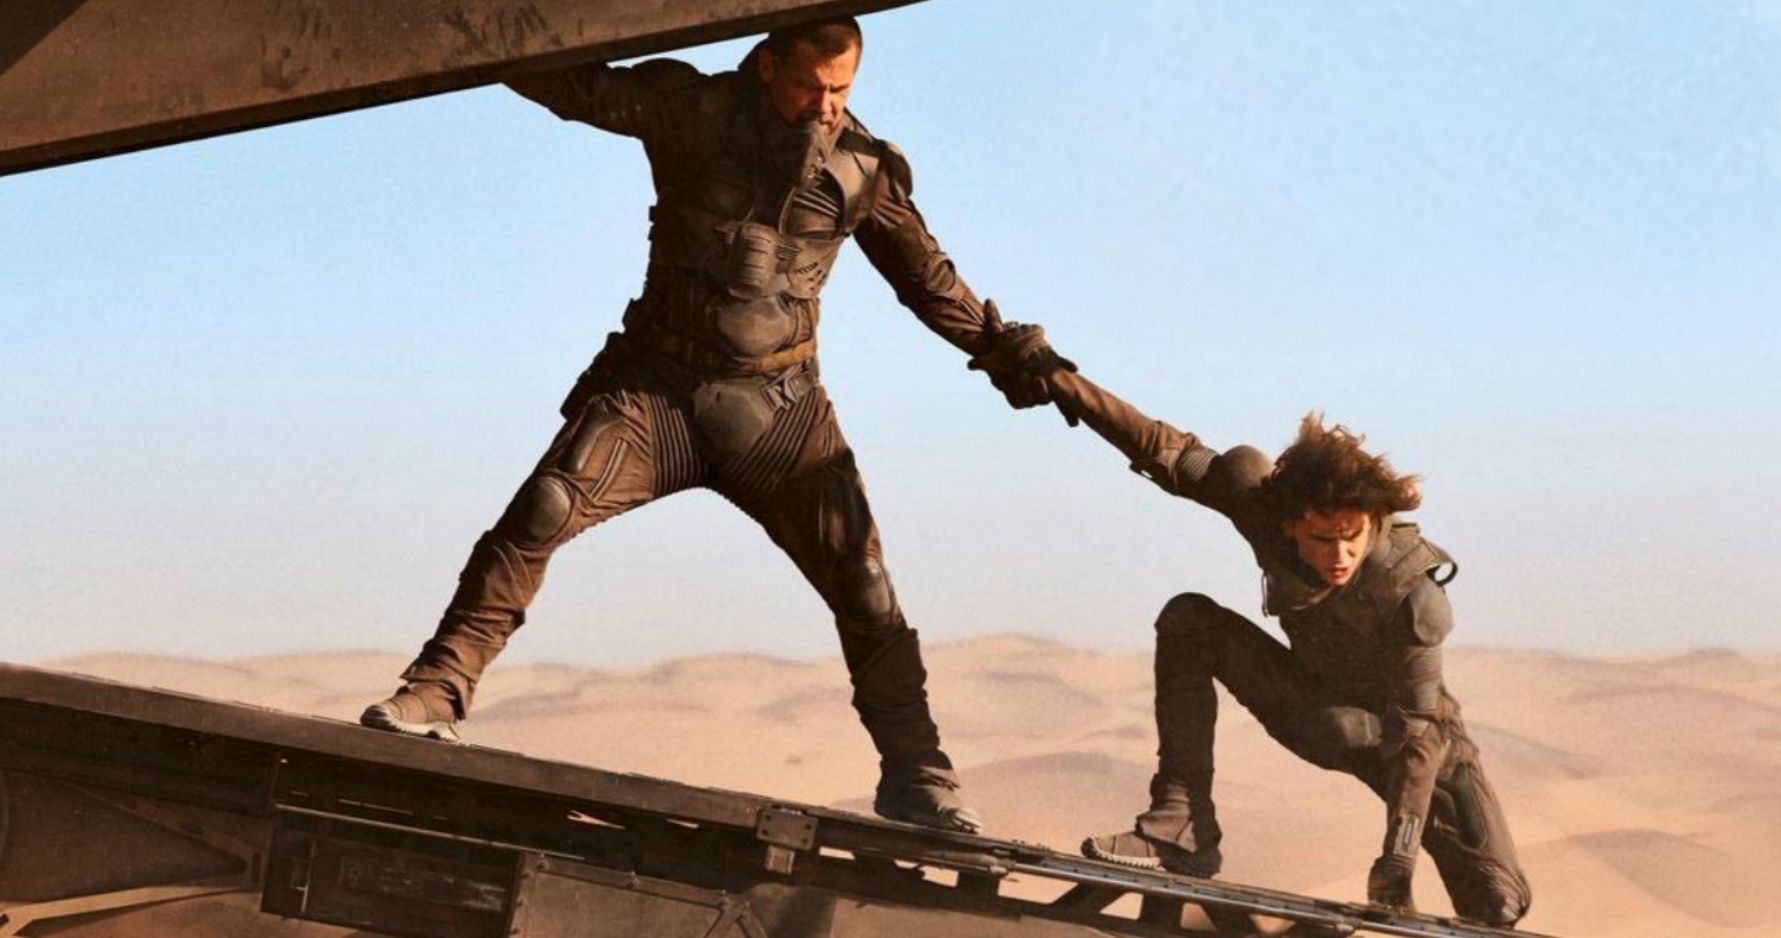 New Dune Image Puts Josh Brolin and Timothee Chalamet on the Edge of Danger